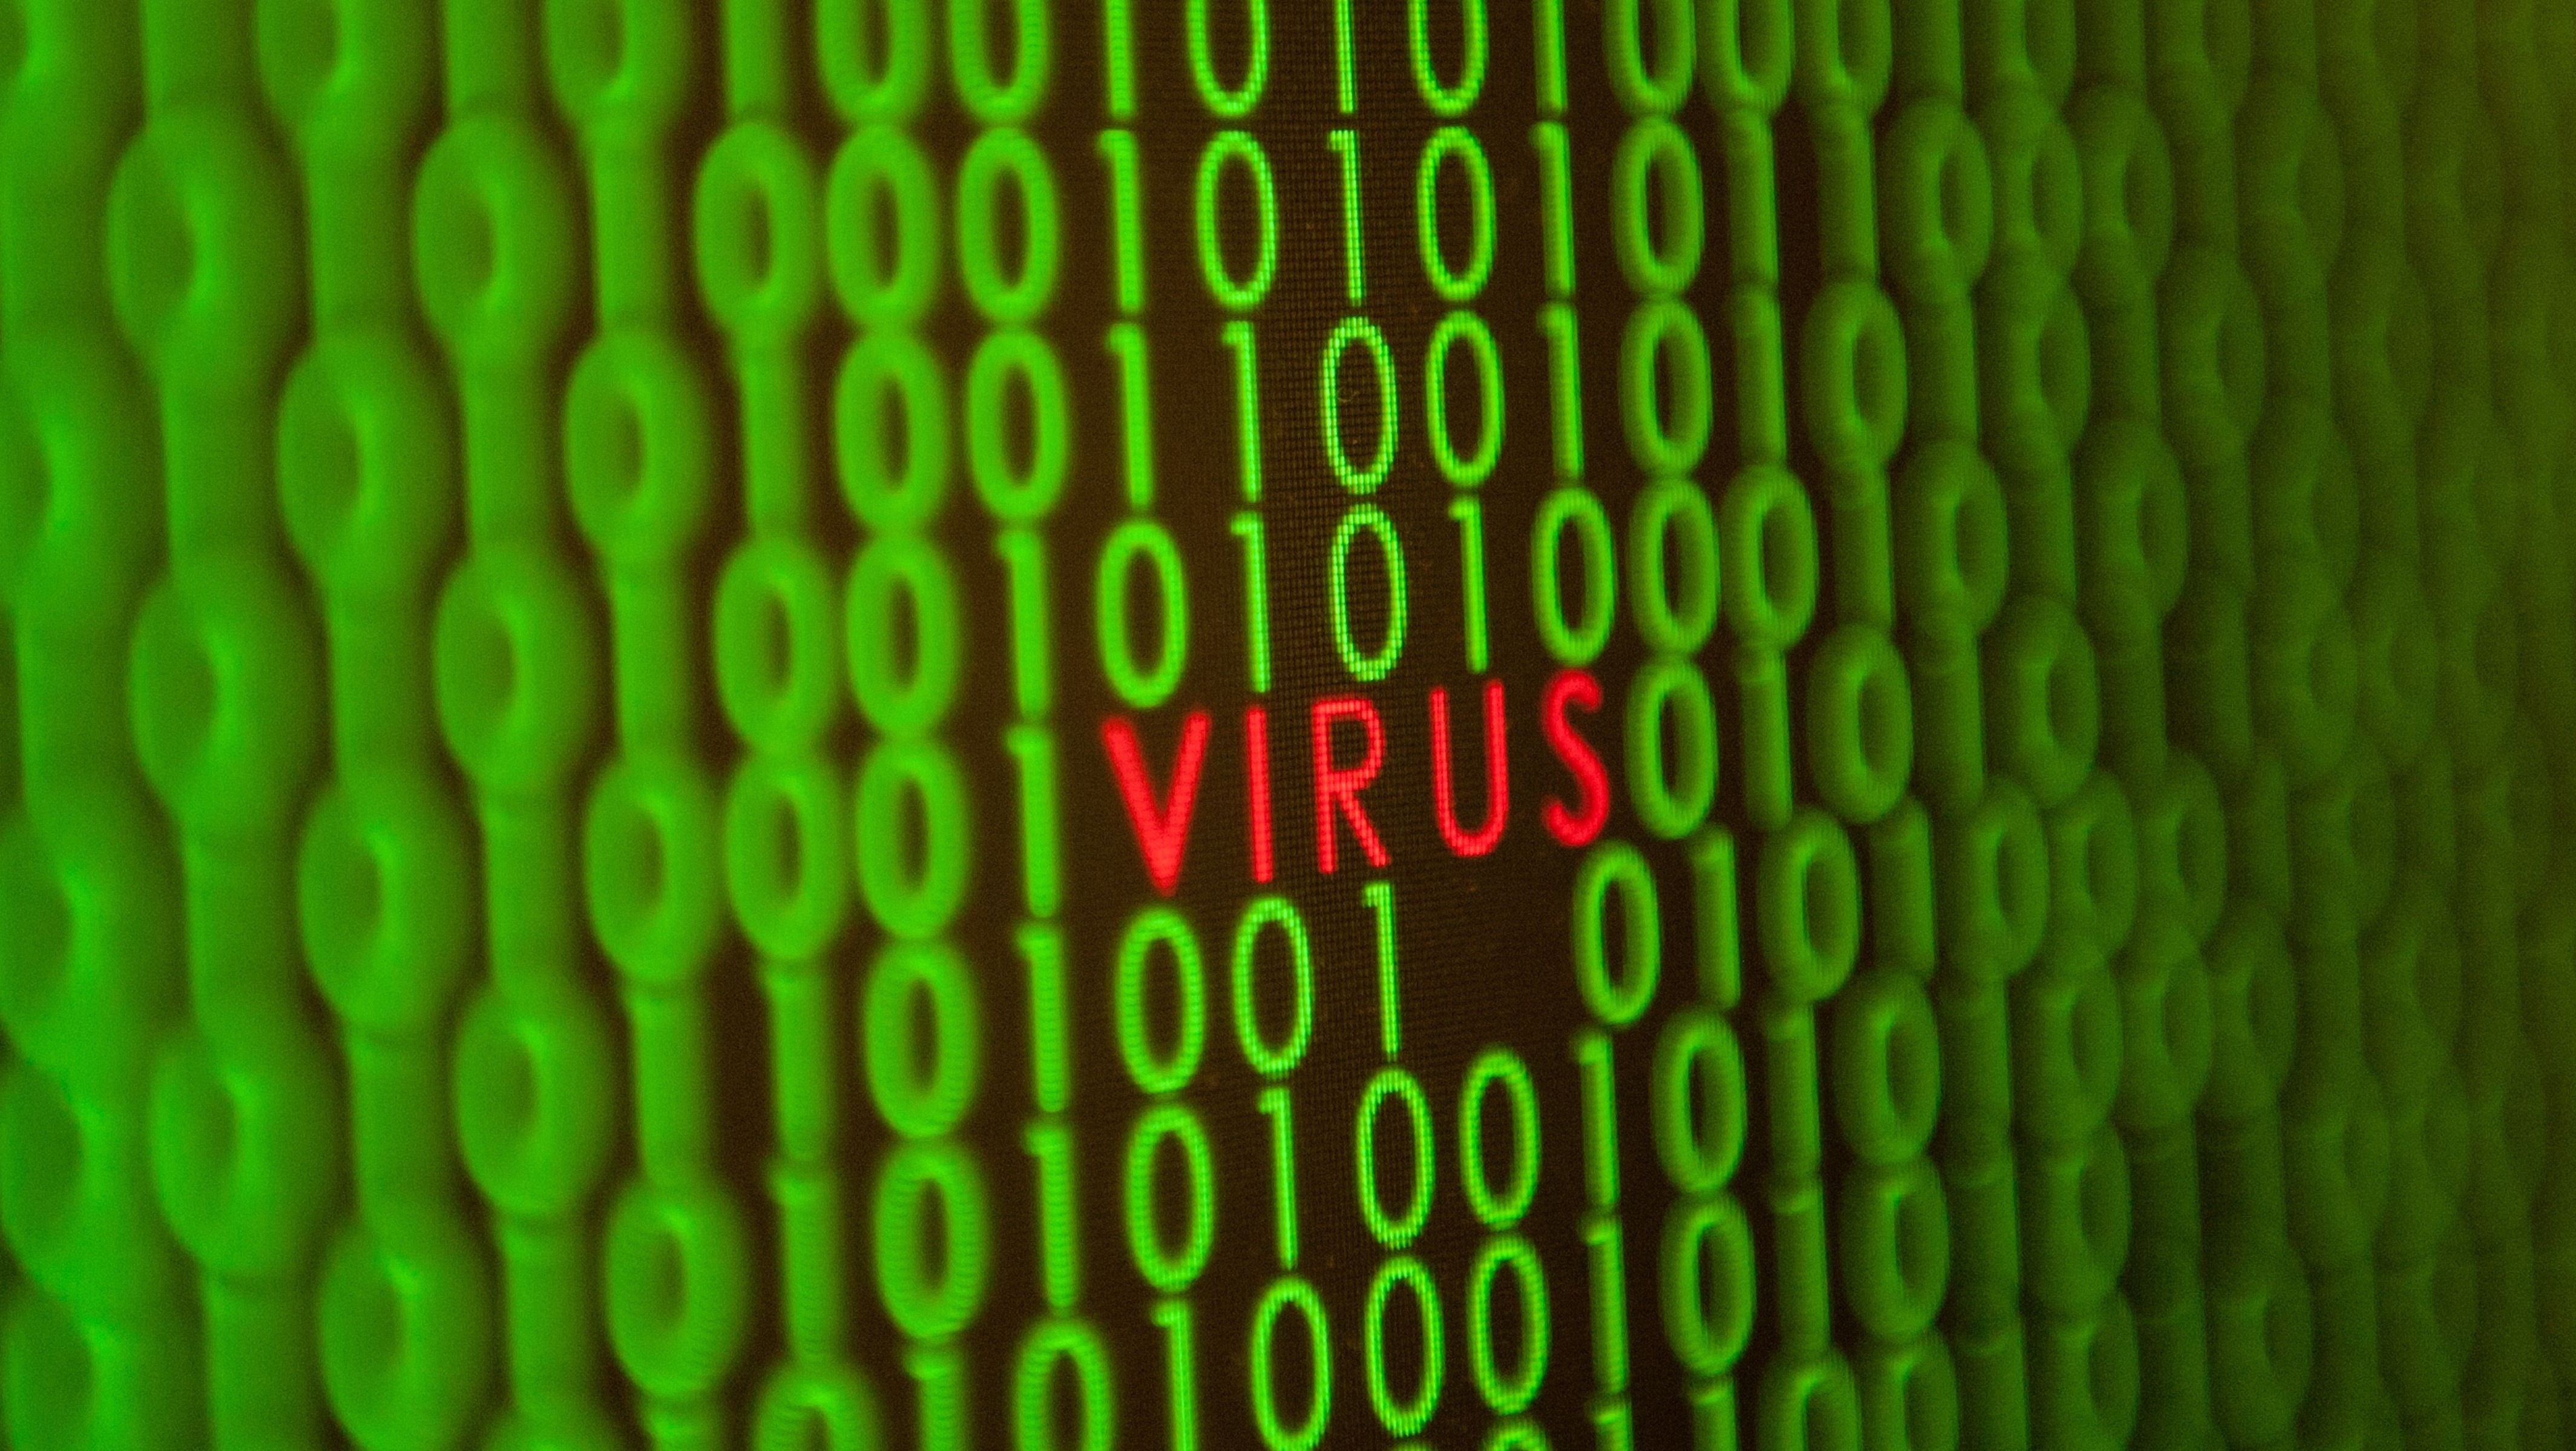 Computer virus is. Компьютерные вирусы. Компьютерный вирус фото. Вирус в компьютере картинка. Фото вируса на ПК.